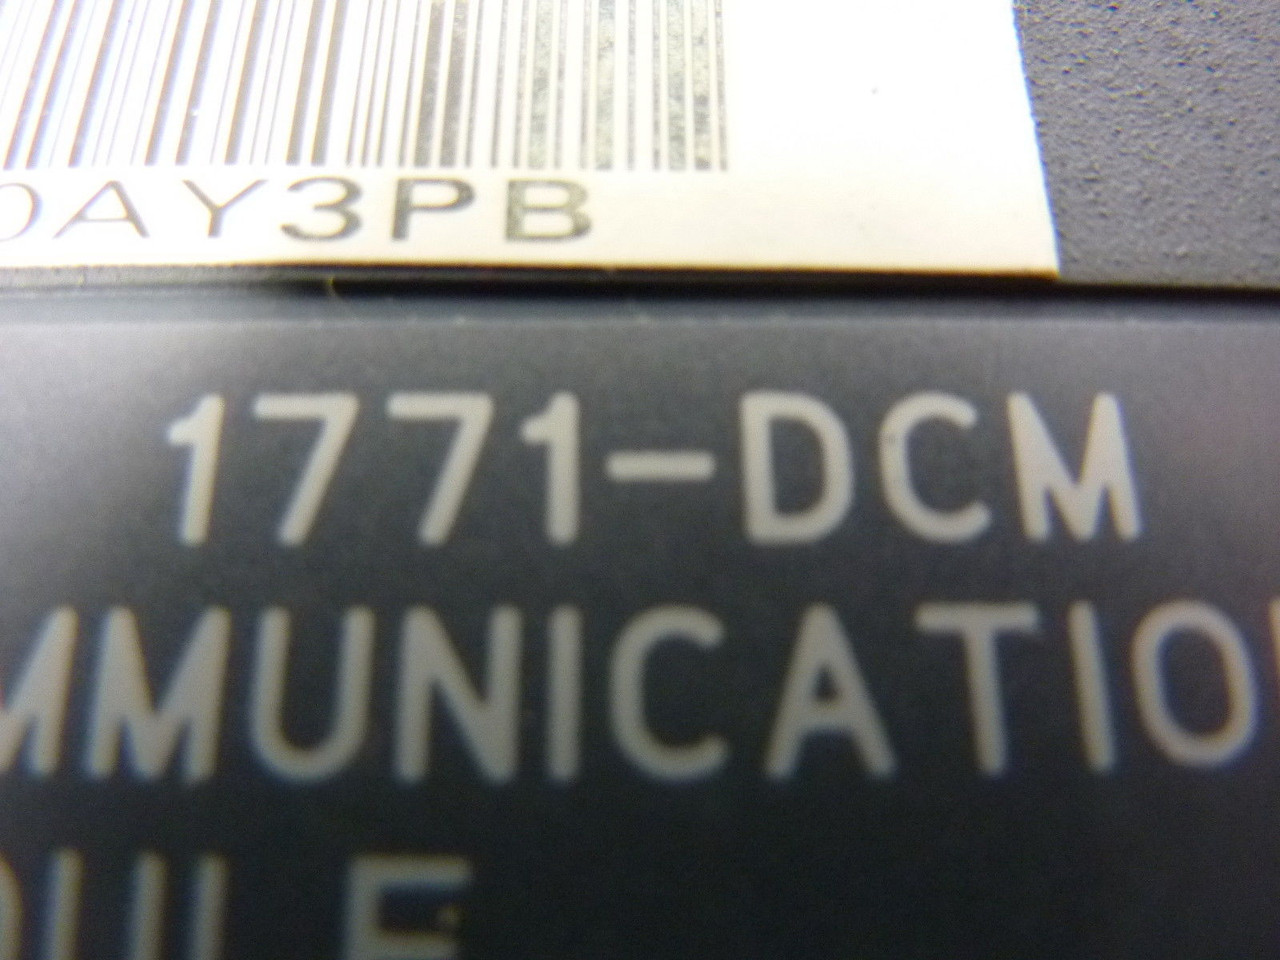 Allen-Bradley 1771-DCM Direct Communication Module USED